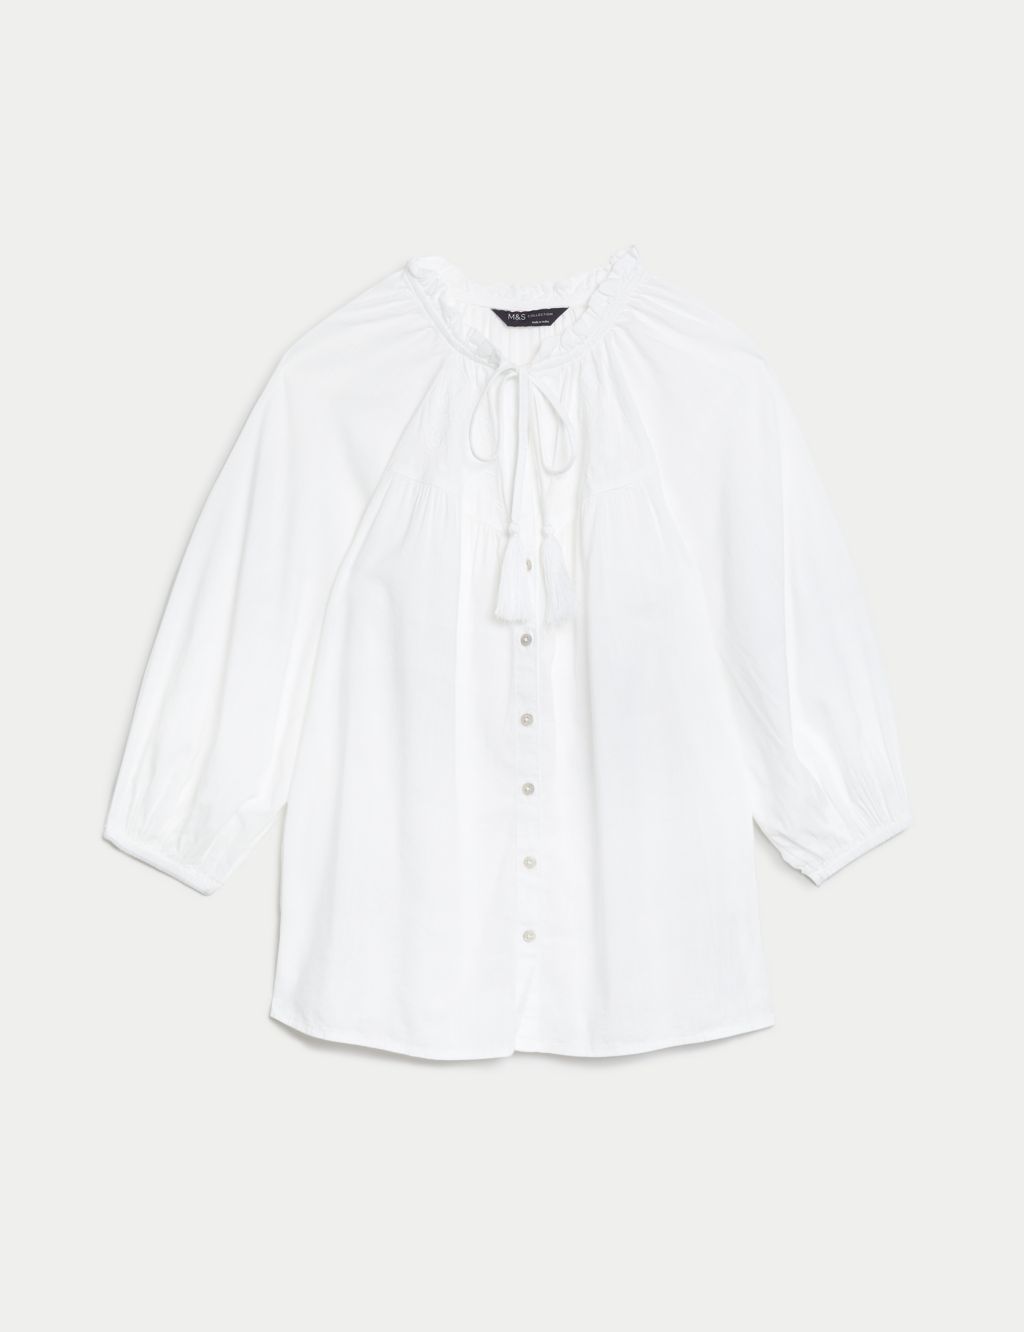 Women’s White Shirts & Blouses | M&S